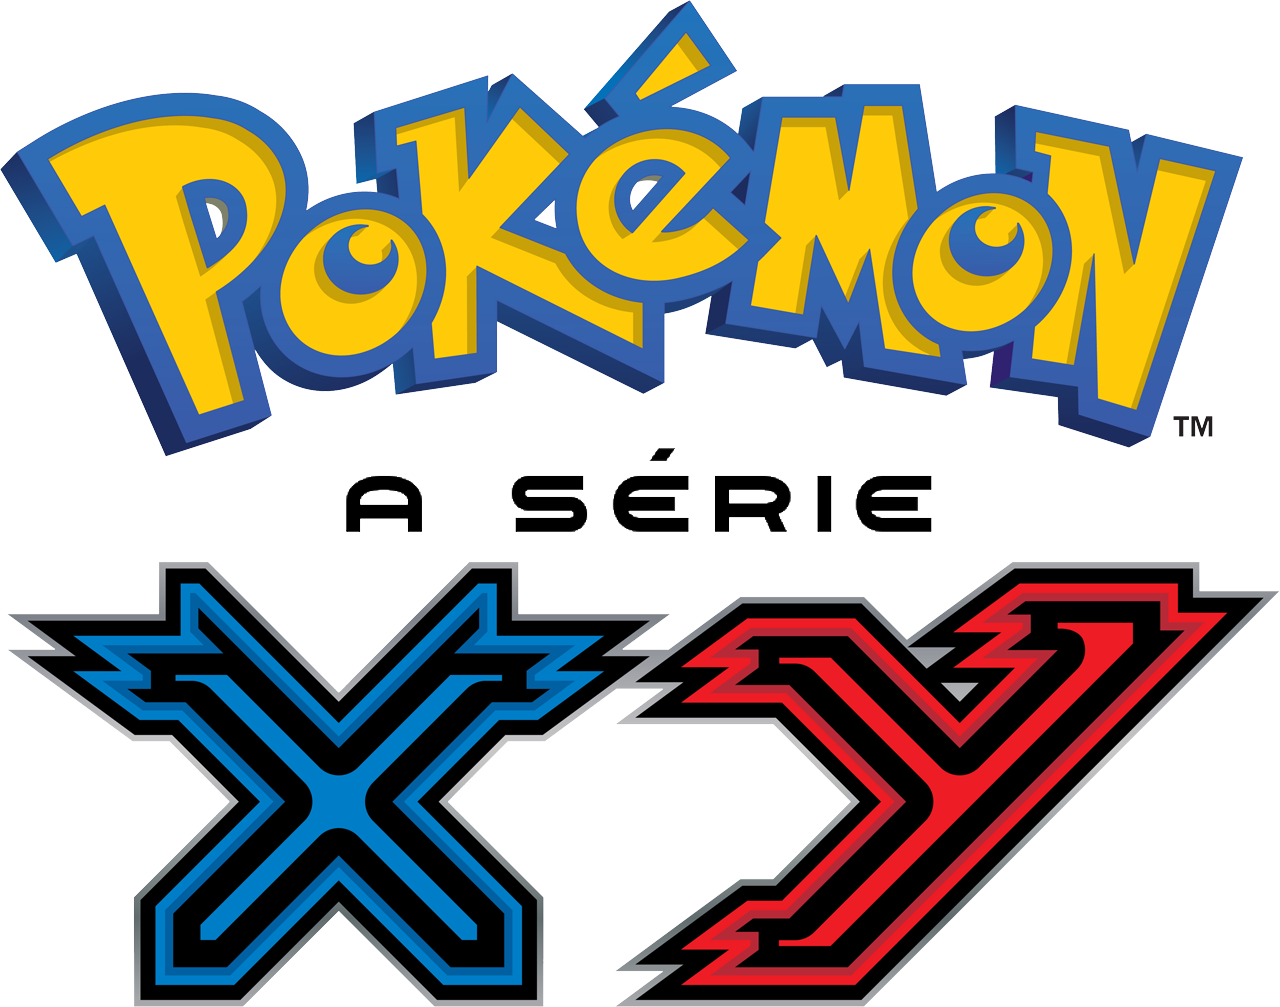 Pokémon Battle Master: Logo Pokémon - Preto e Branco finalizado!